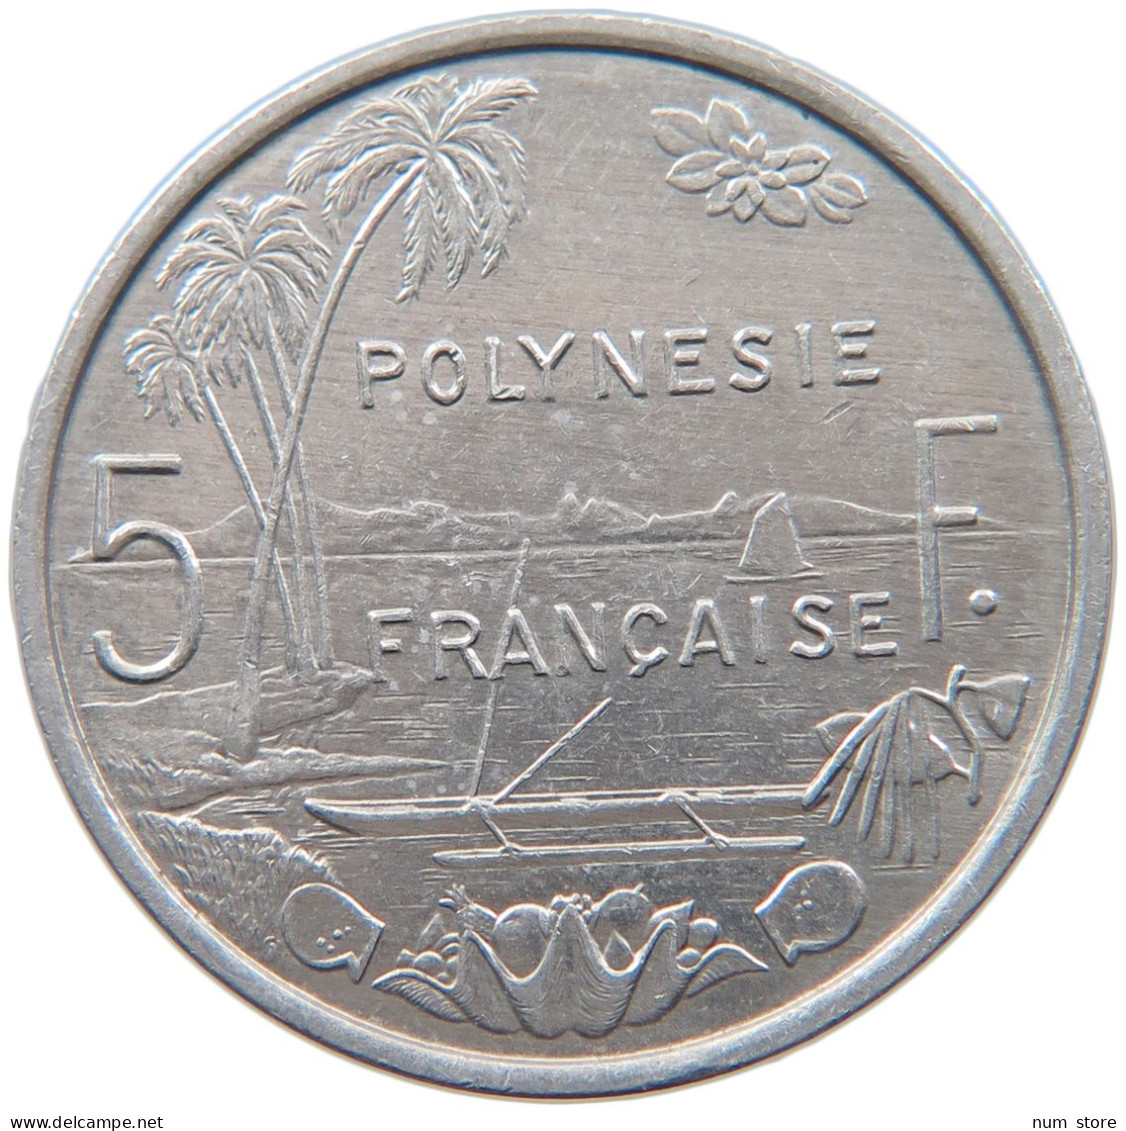 FRENCH POLYNESIA 5 FRANCS 1994 #s098 0225 - Polinesia Francesa